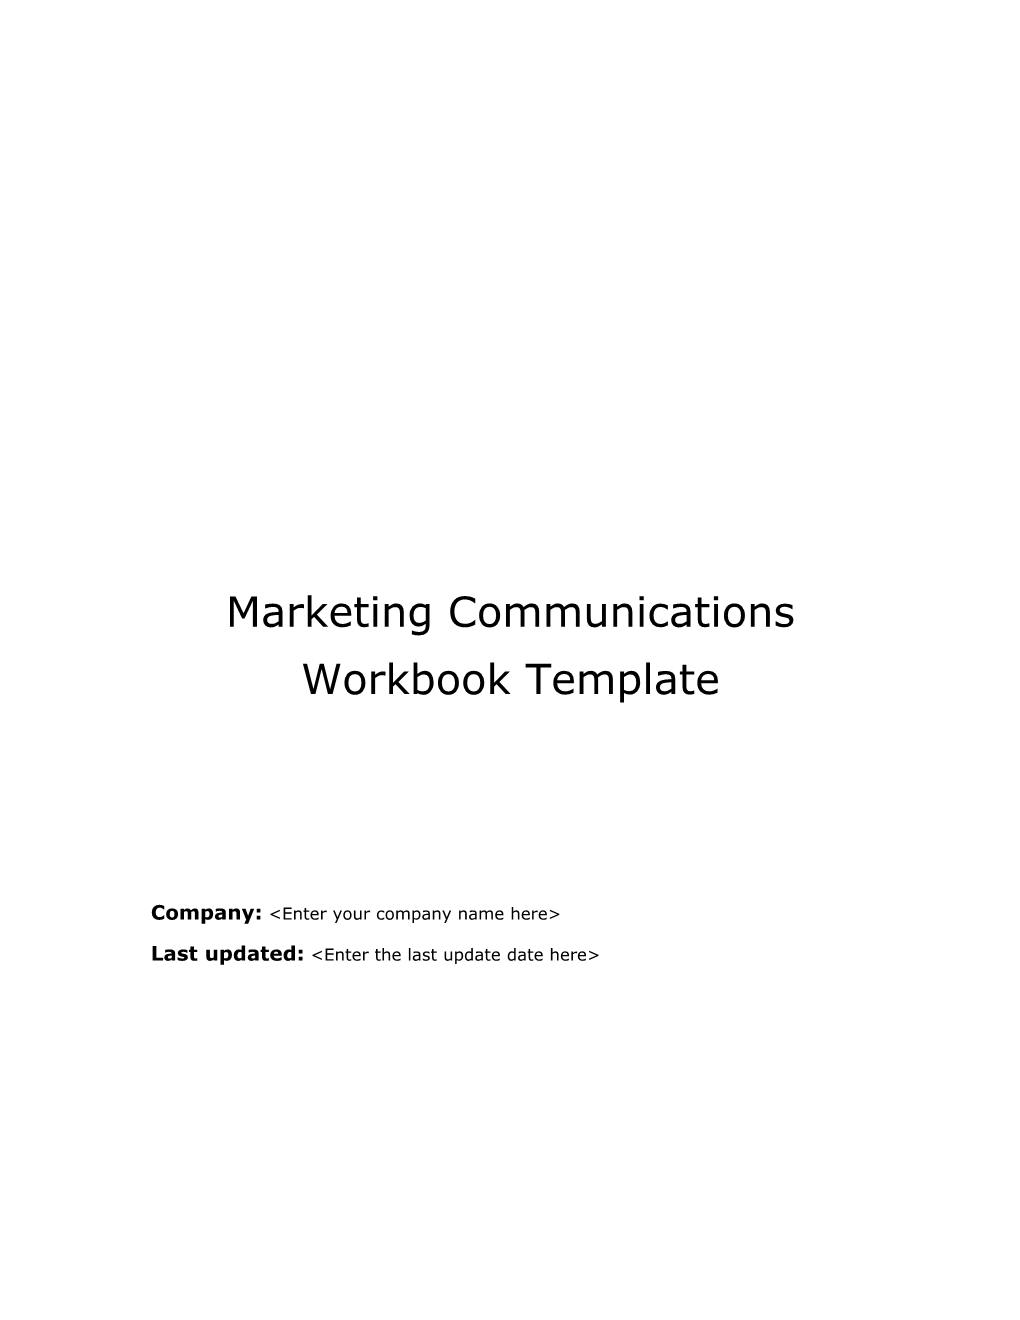 Marketing Communications Workbook Template